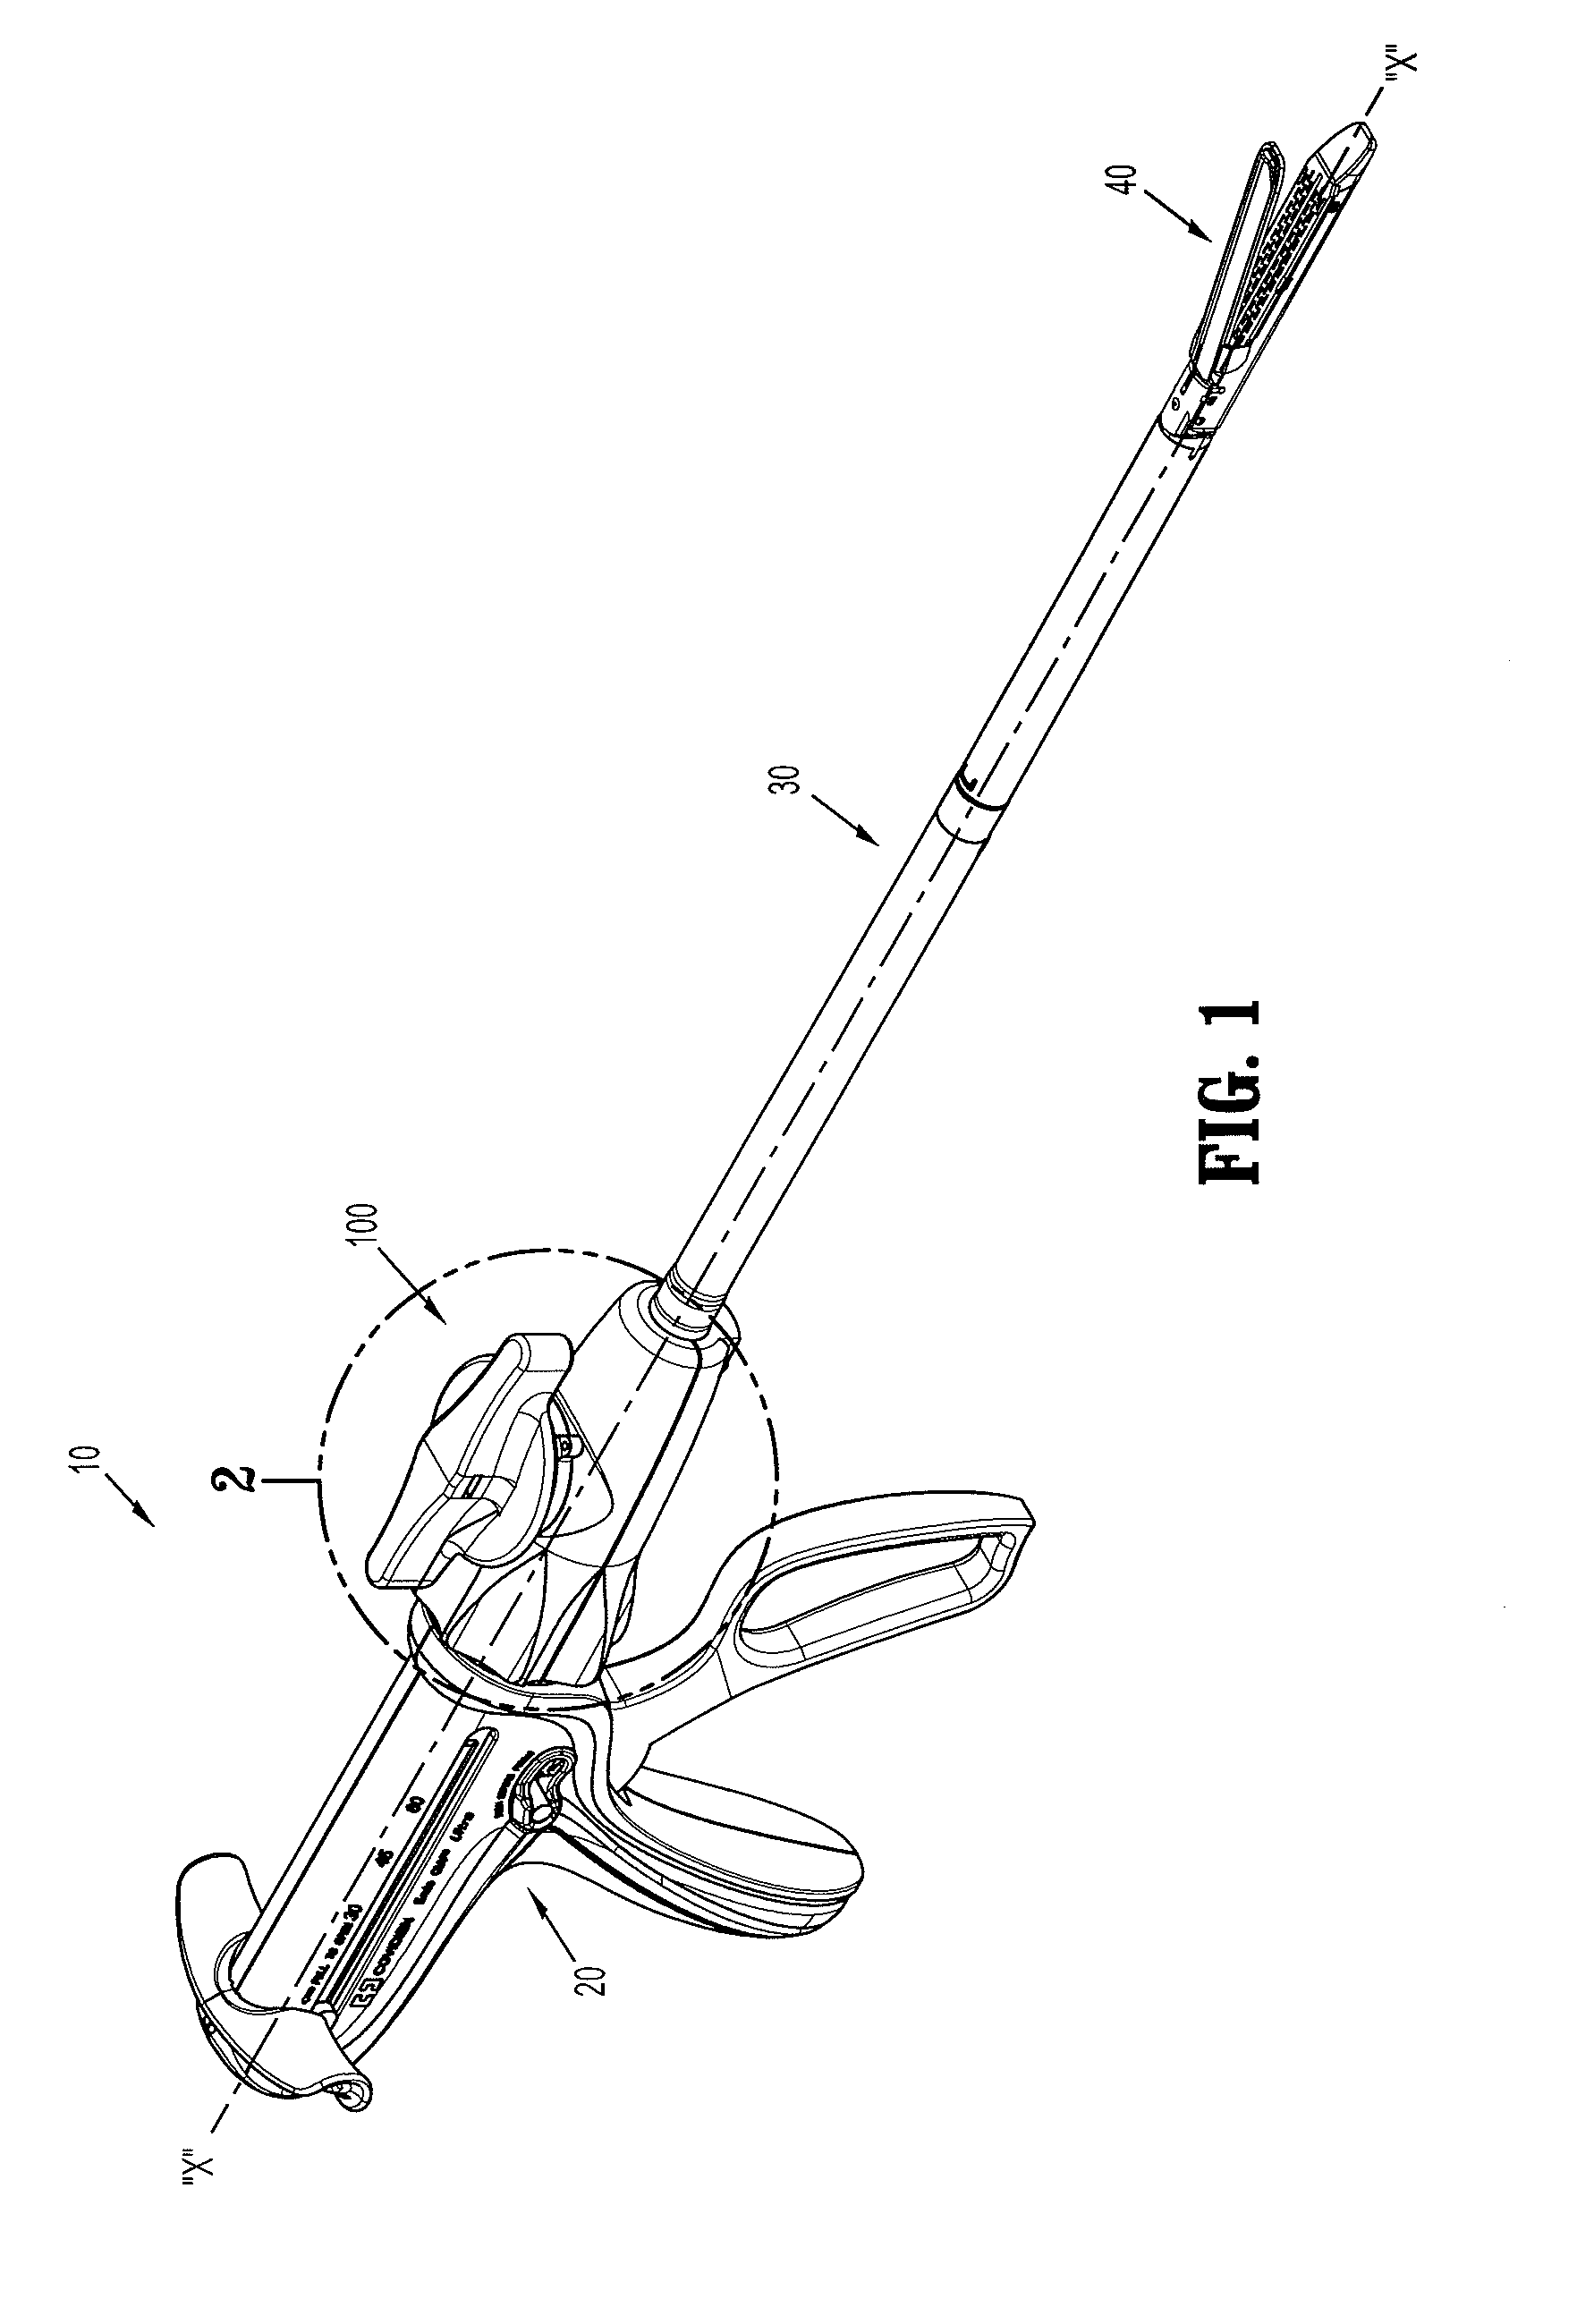 Locking articulation mechanism for surgical stapler